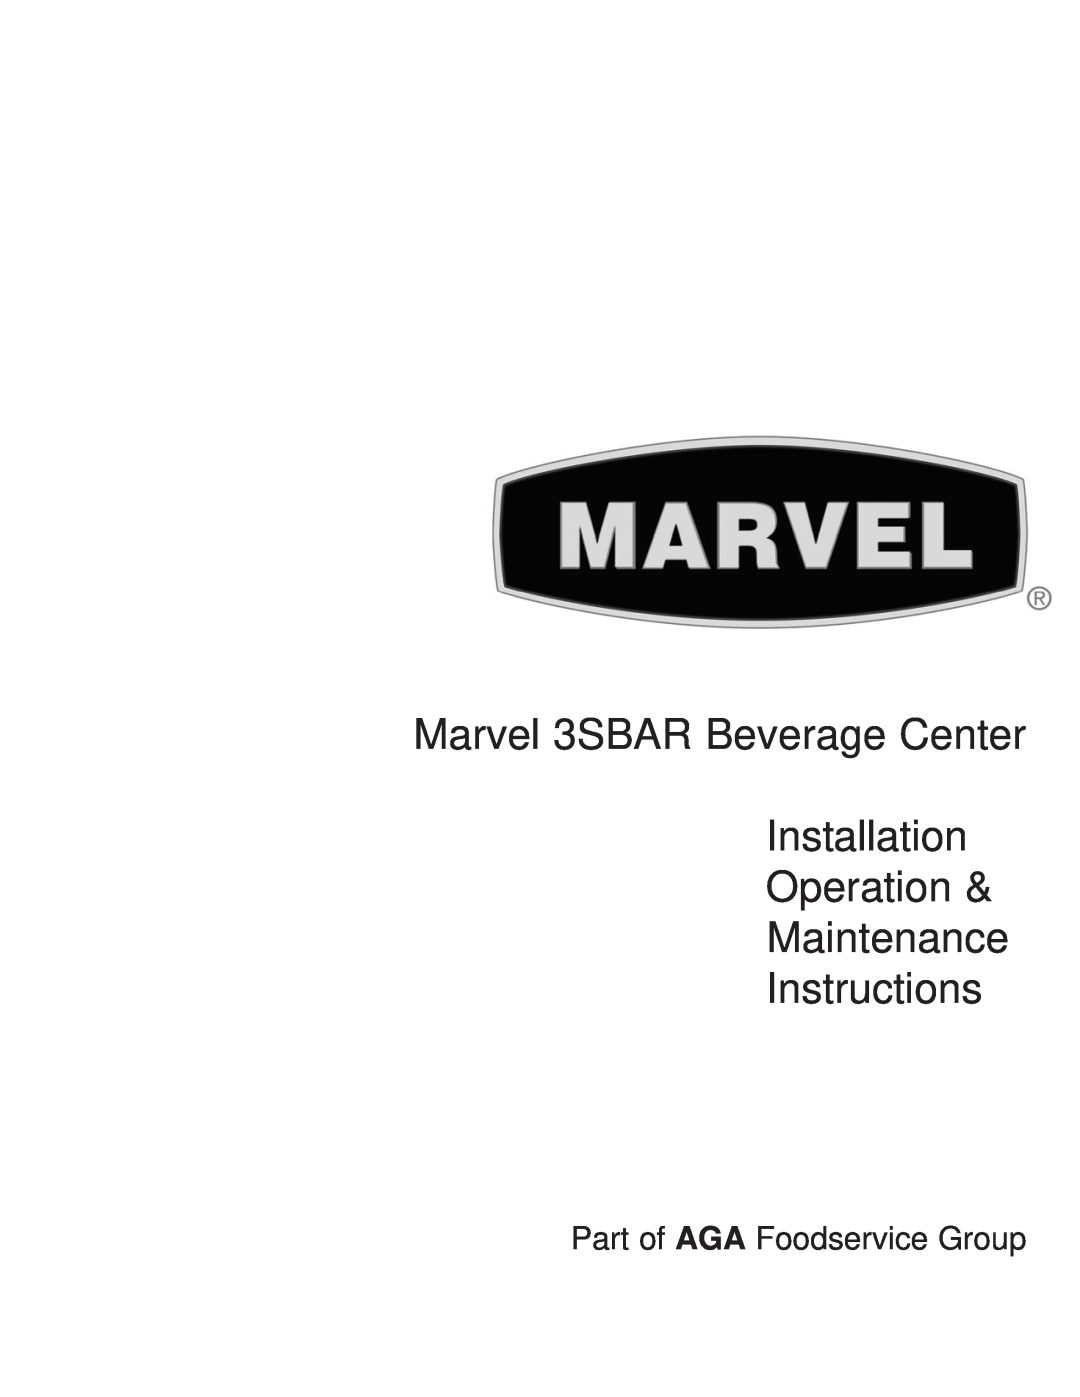 Marvel Industries manual Part of AGA Foodservice Group, Marvel 3SBAR Beverage Center 